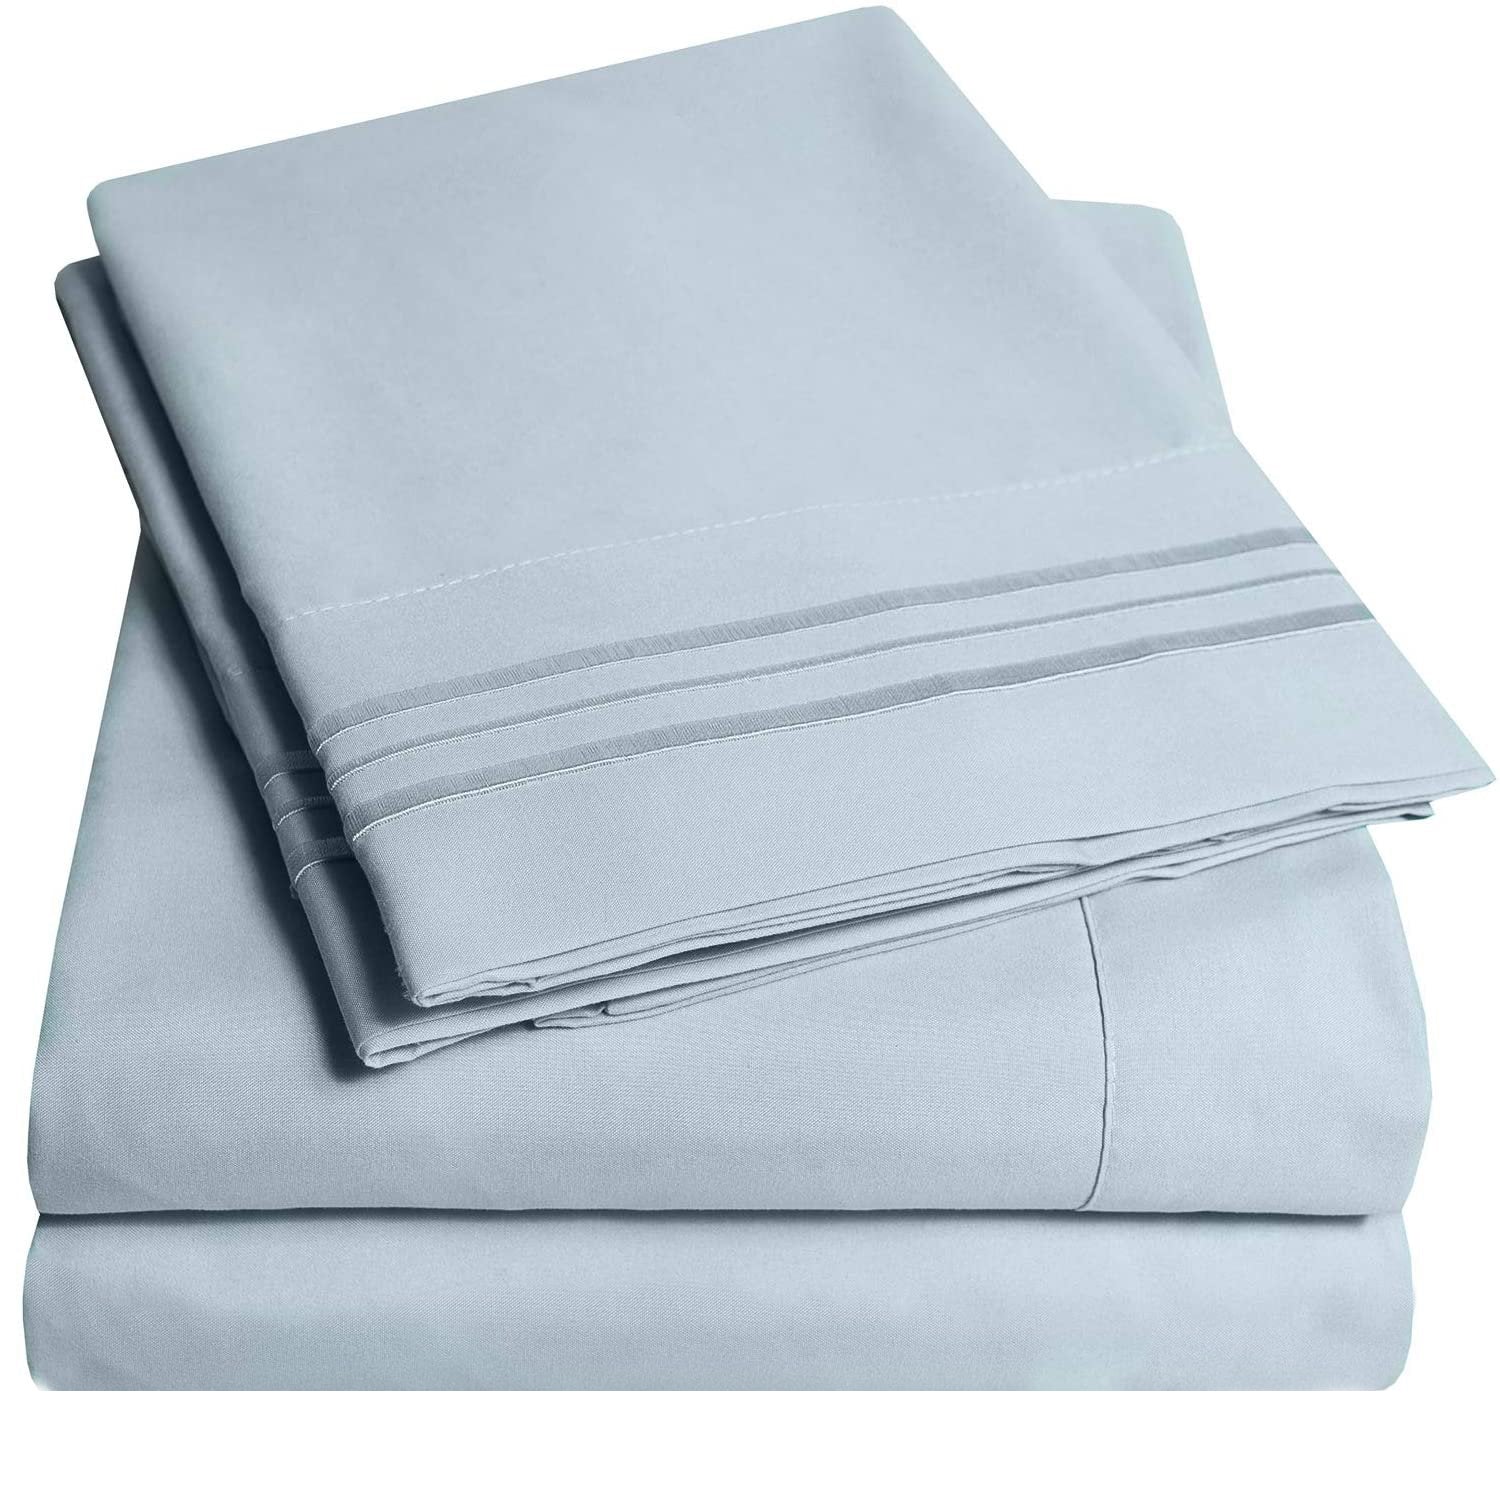 Classic 4-Piece Bed Sheet Set (Misty Blue) - Folded